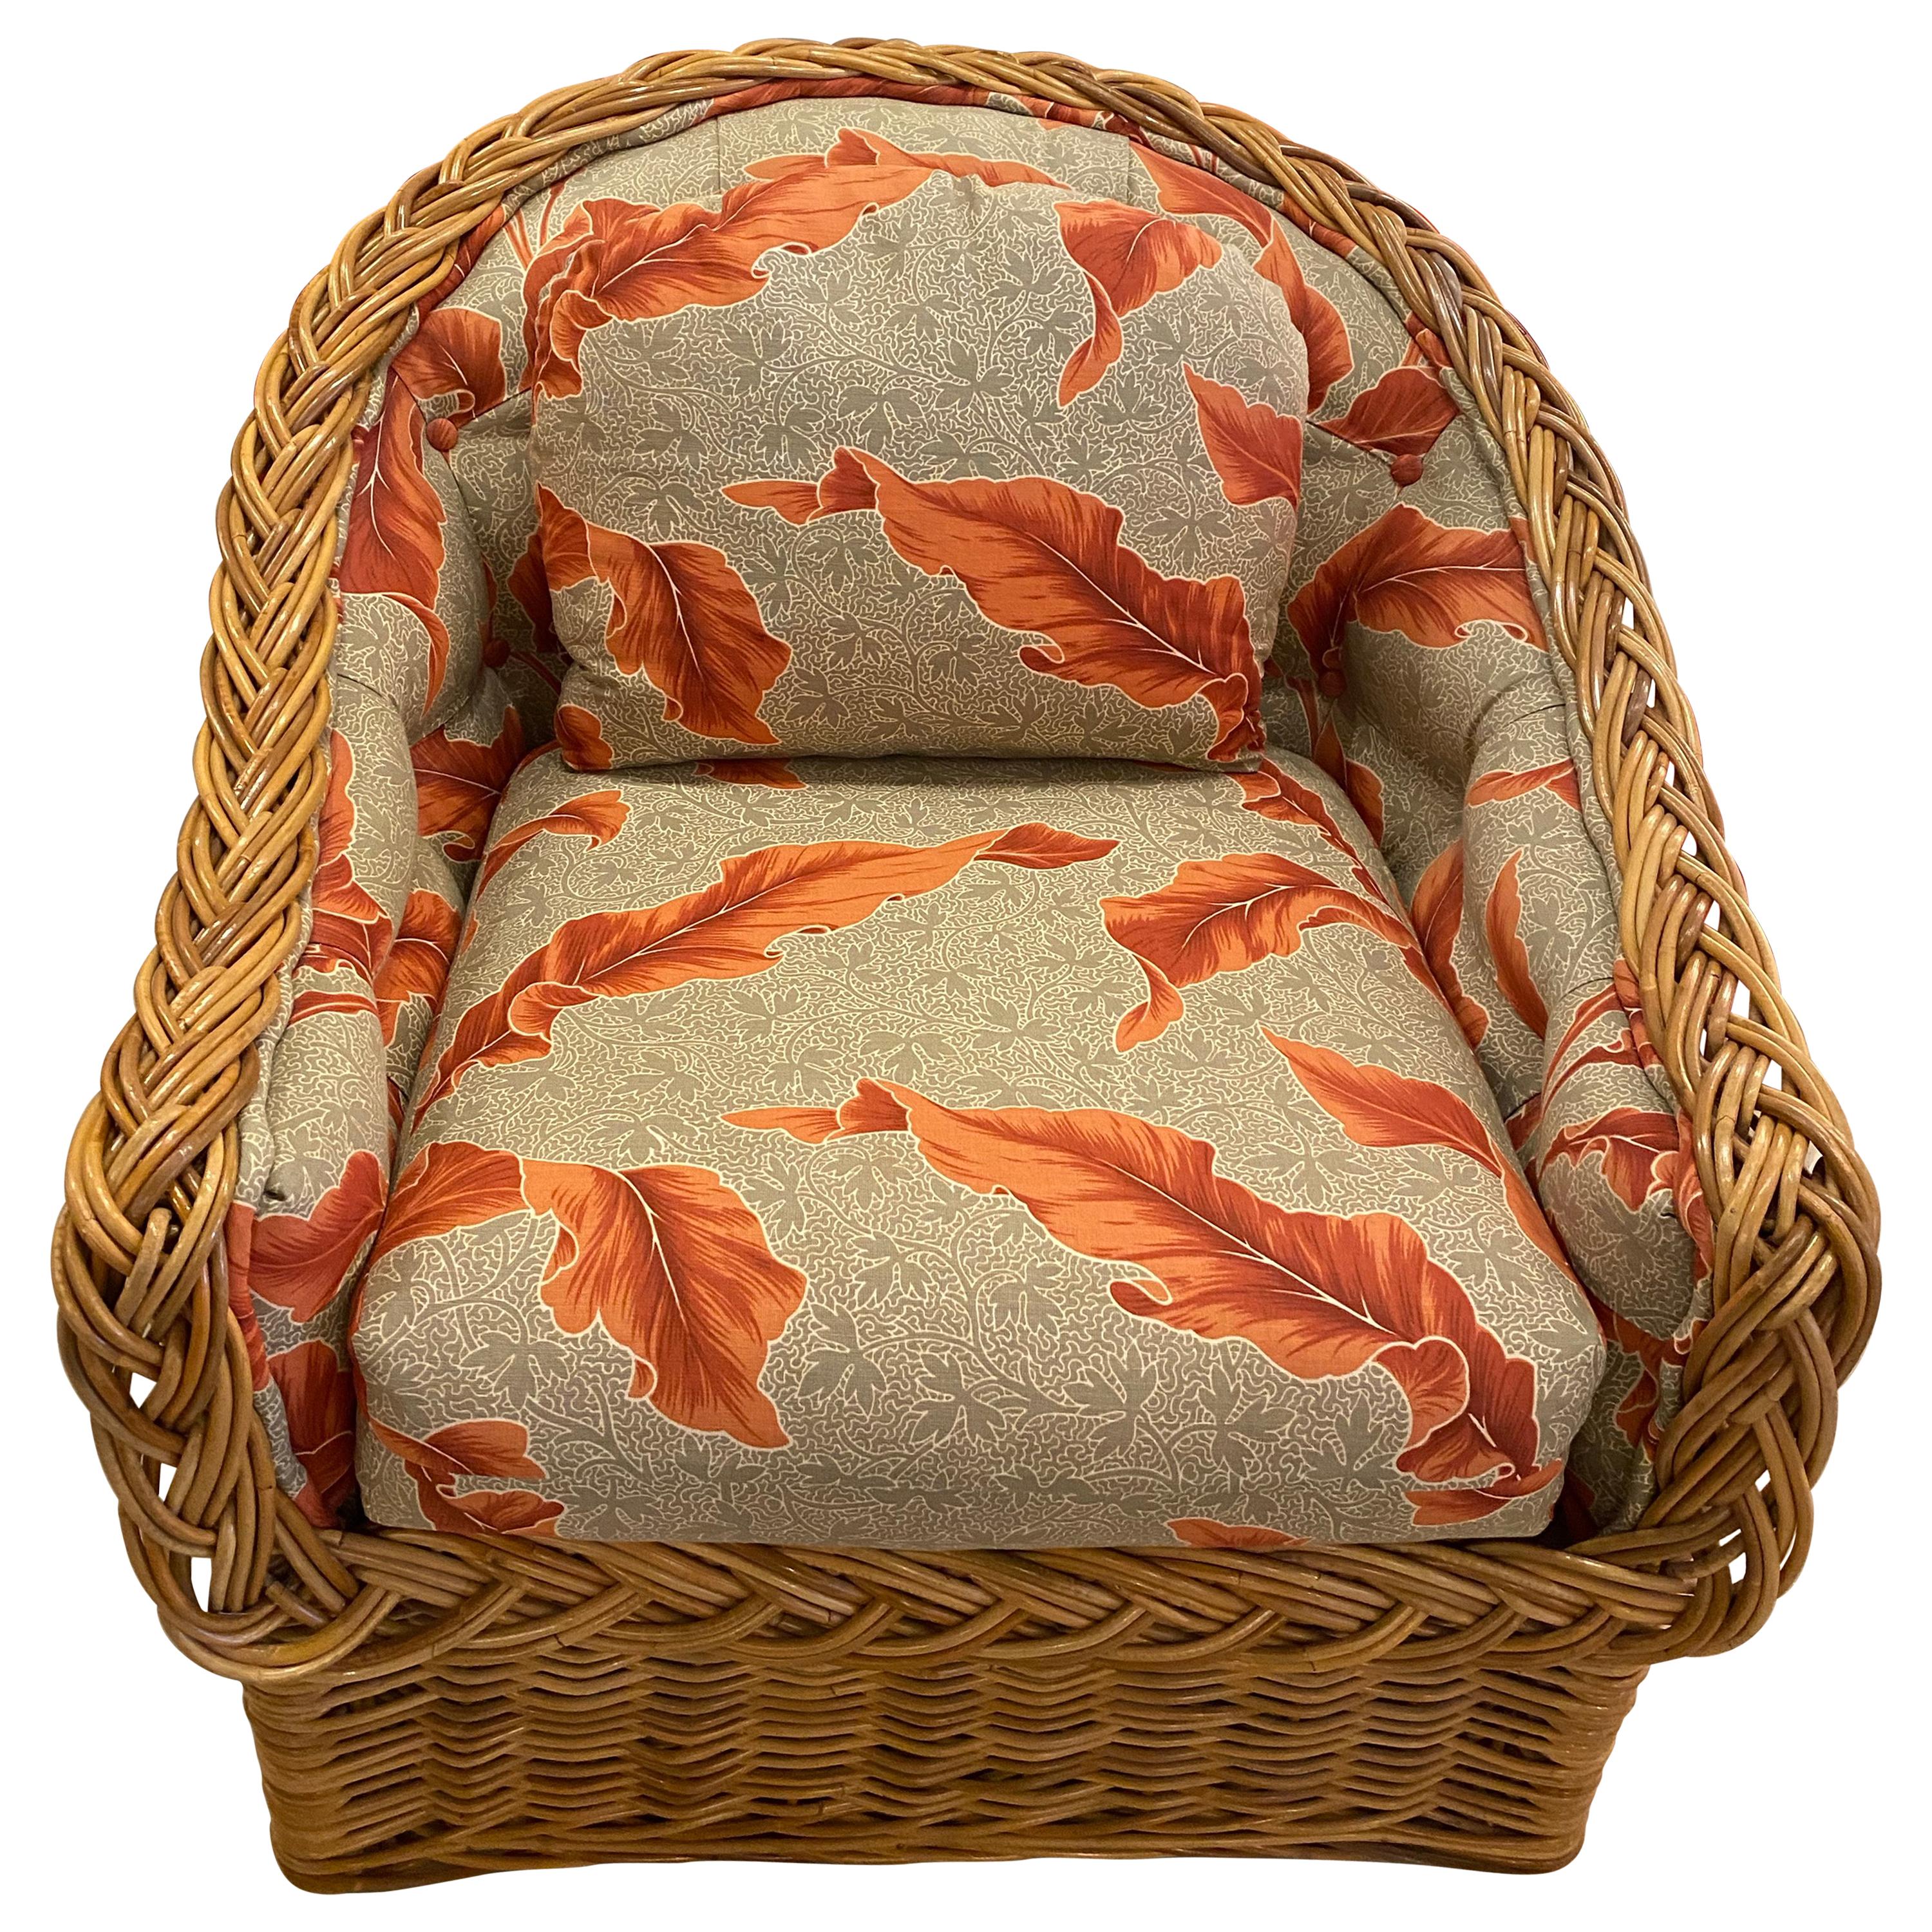 Vintage Tropical Leaf Palm Beach Braided Wicker Arm Lounge Chair by Wicker Works